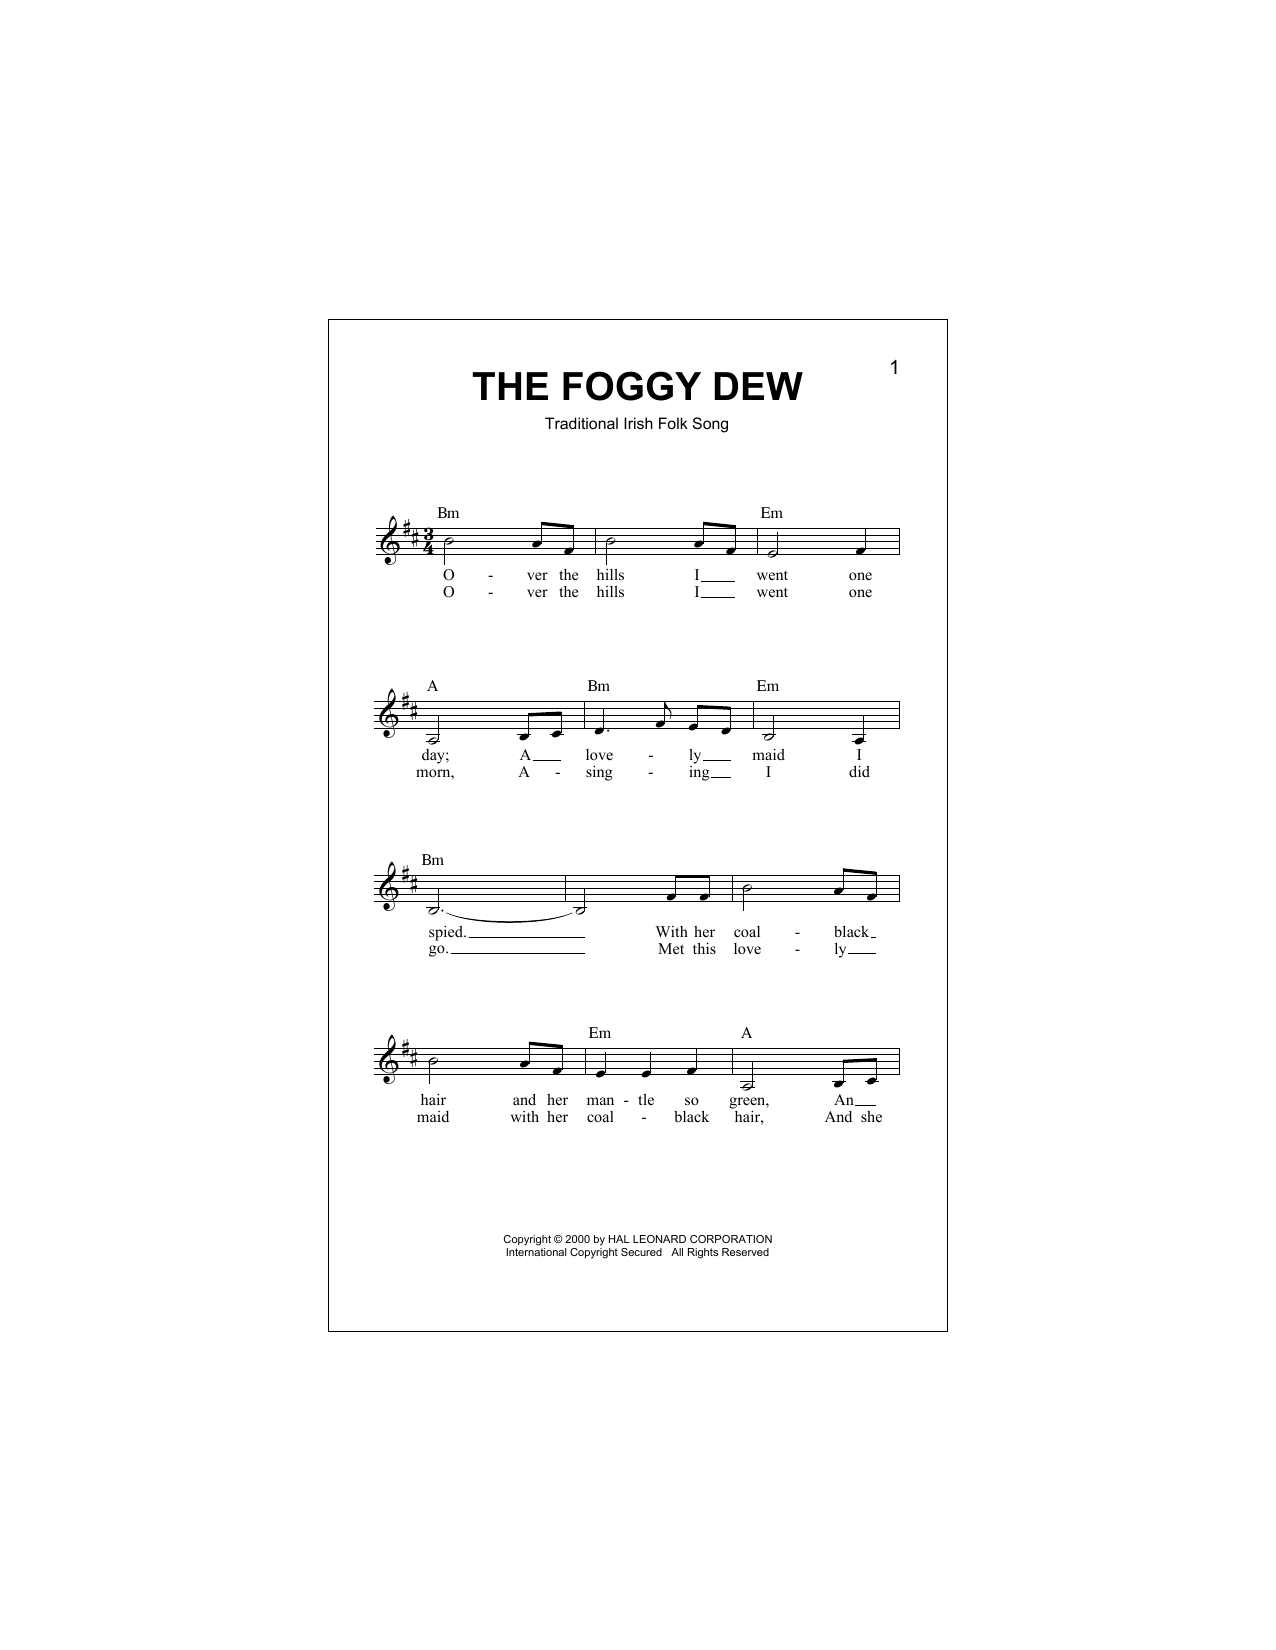 Download Traditional Irish Folk Song The Foggy Dew Sheet Music